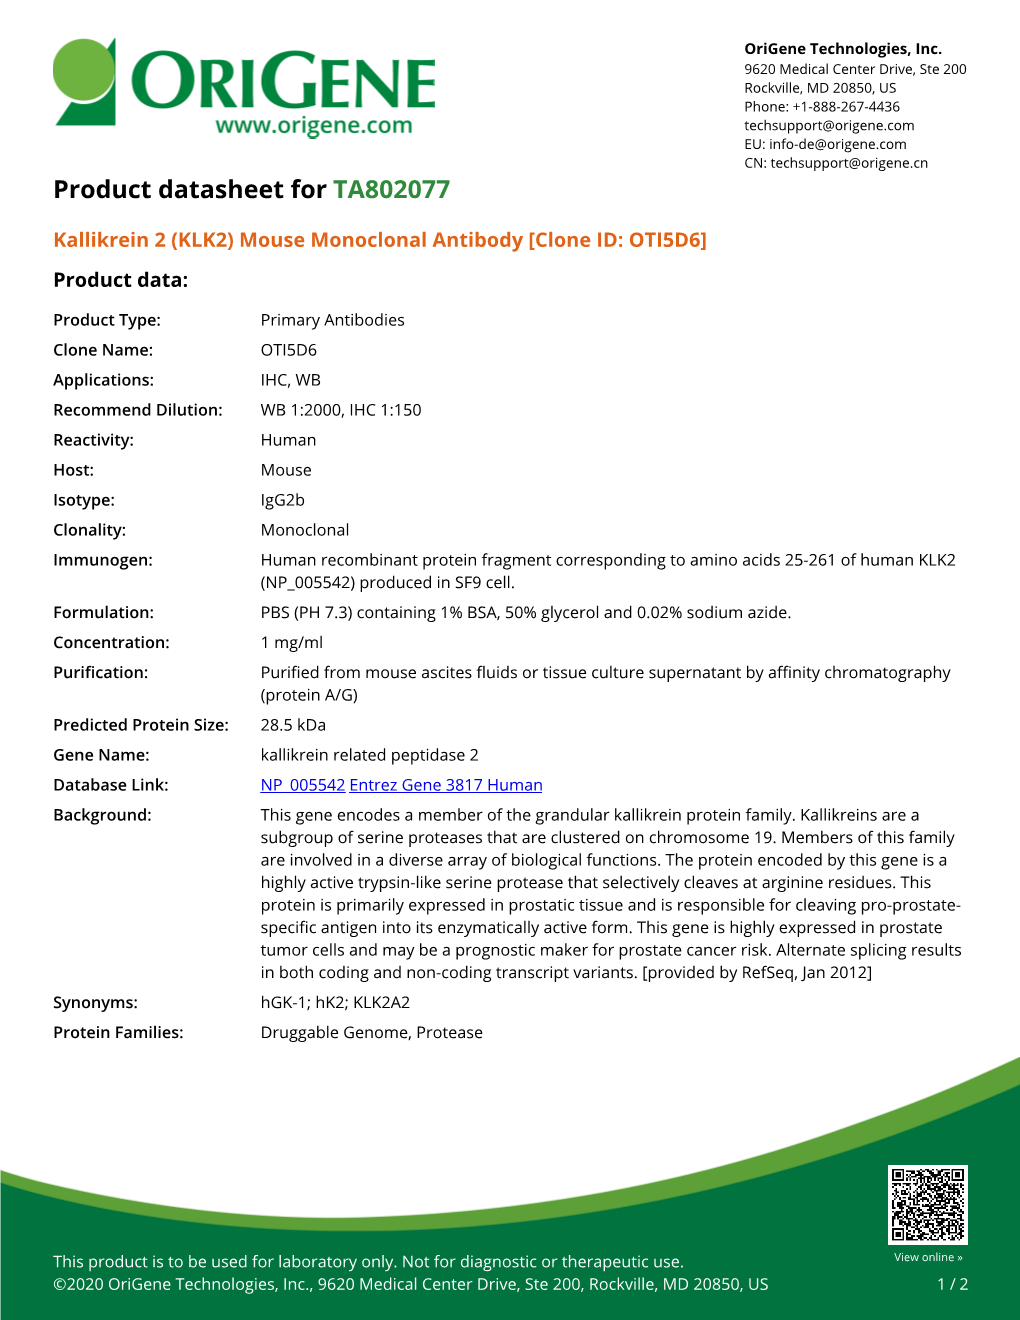 Kallikrein 2 (KLK2) Mouse Monoclonal Antibody [Clone ID: OTI5D6] Product Data